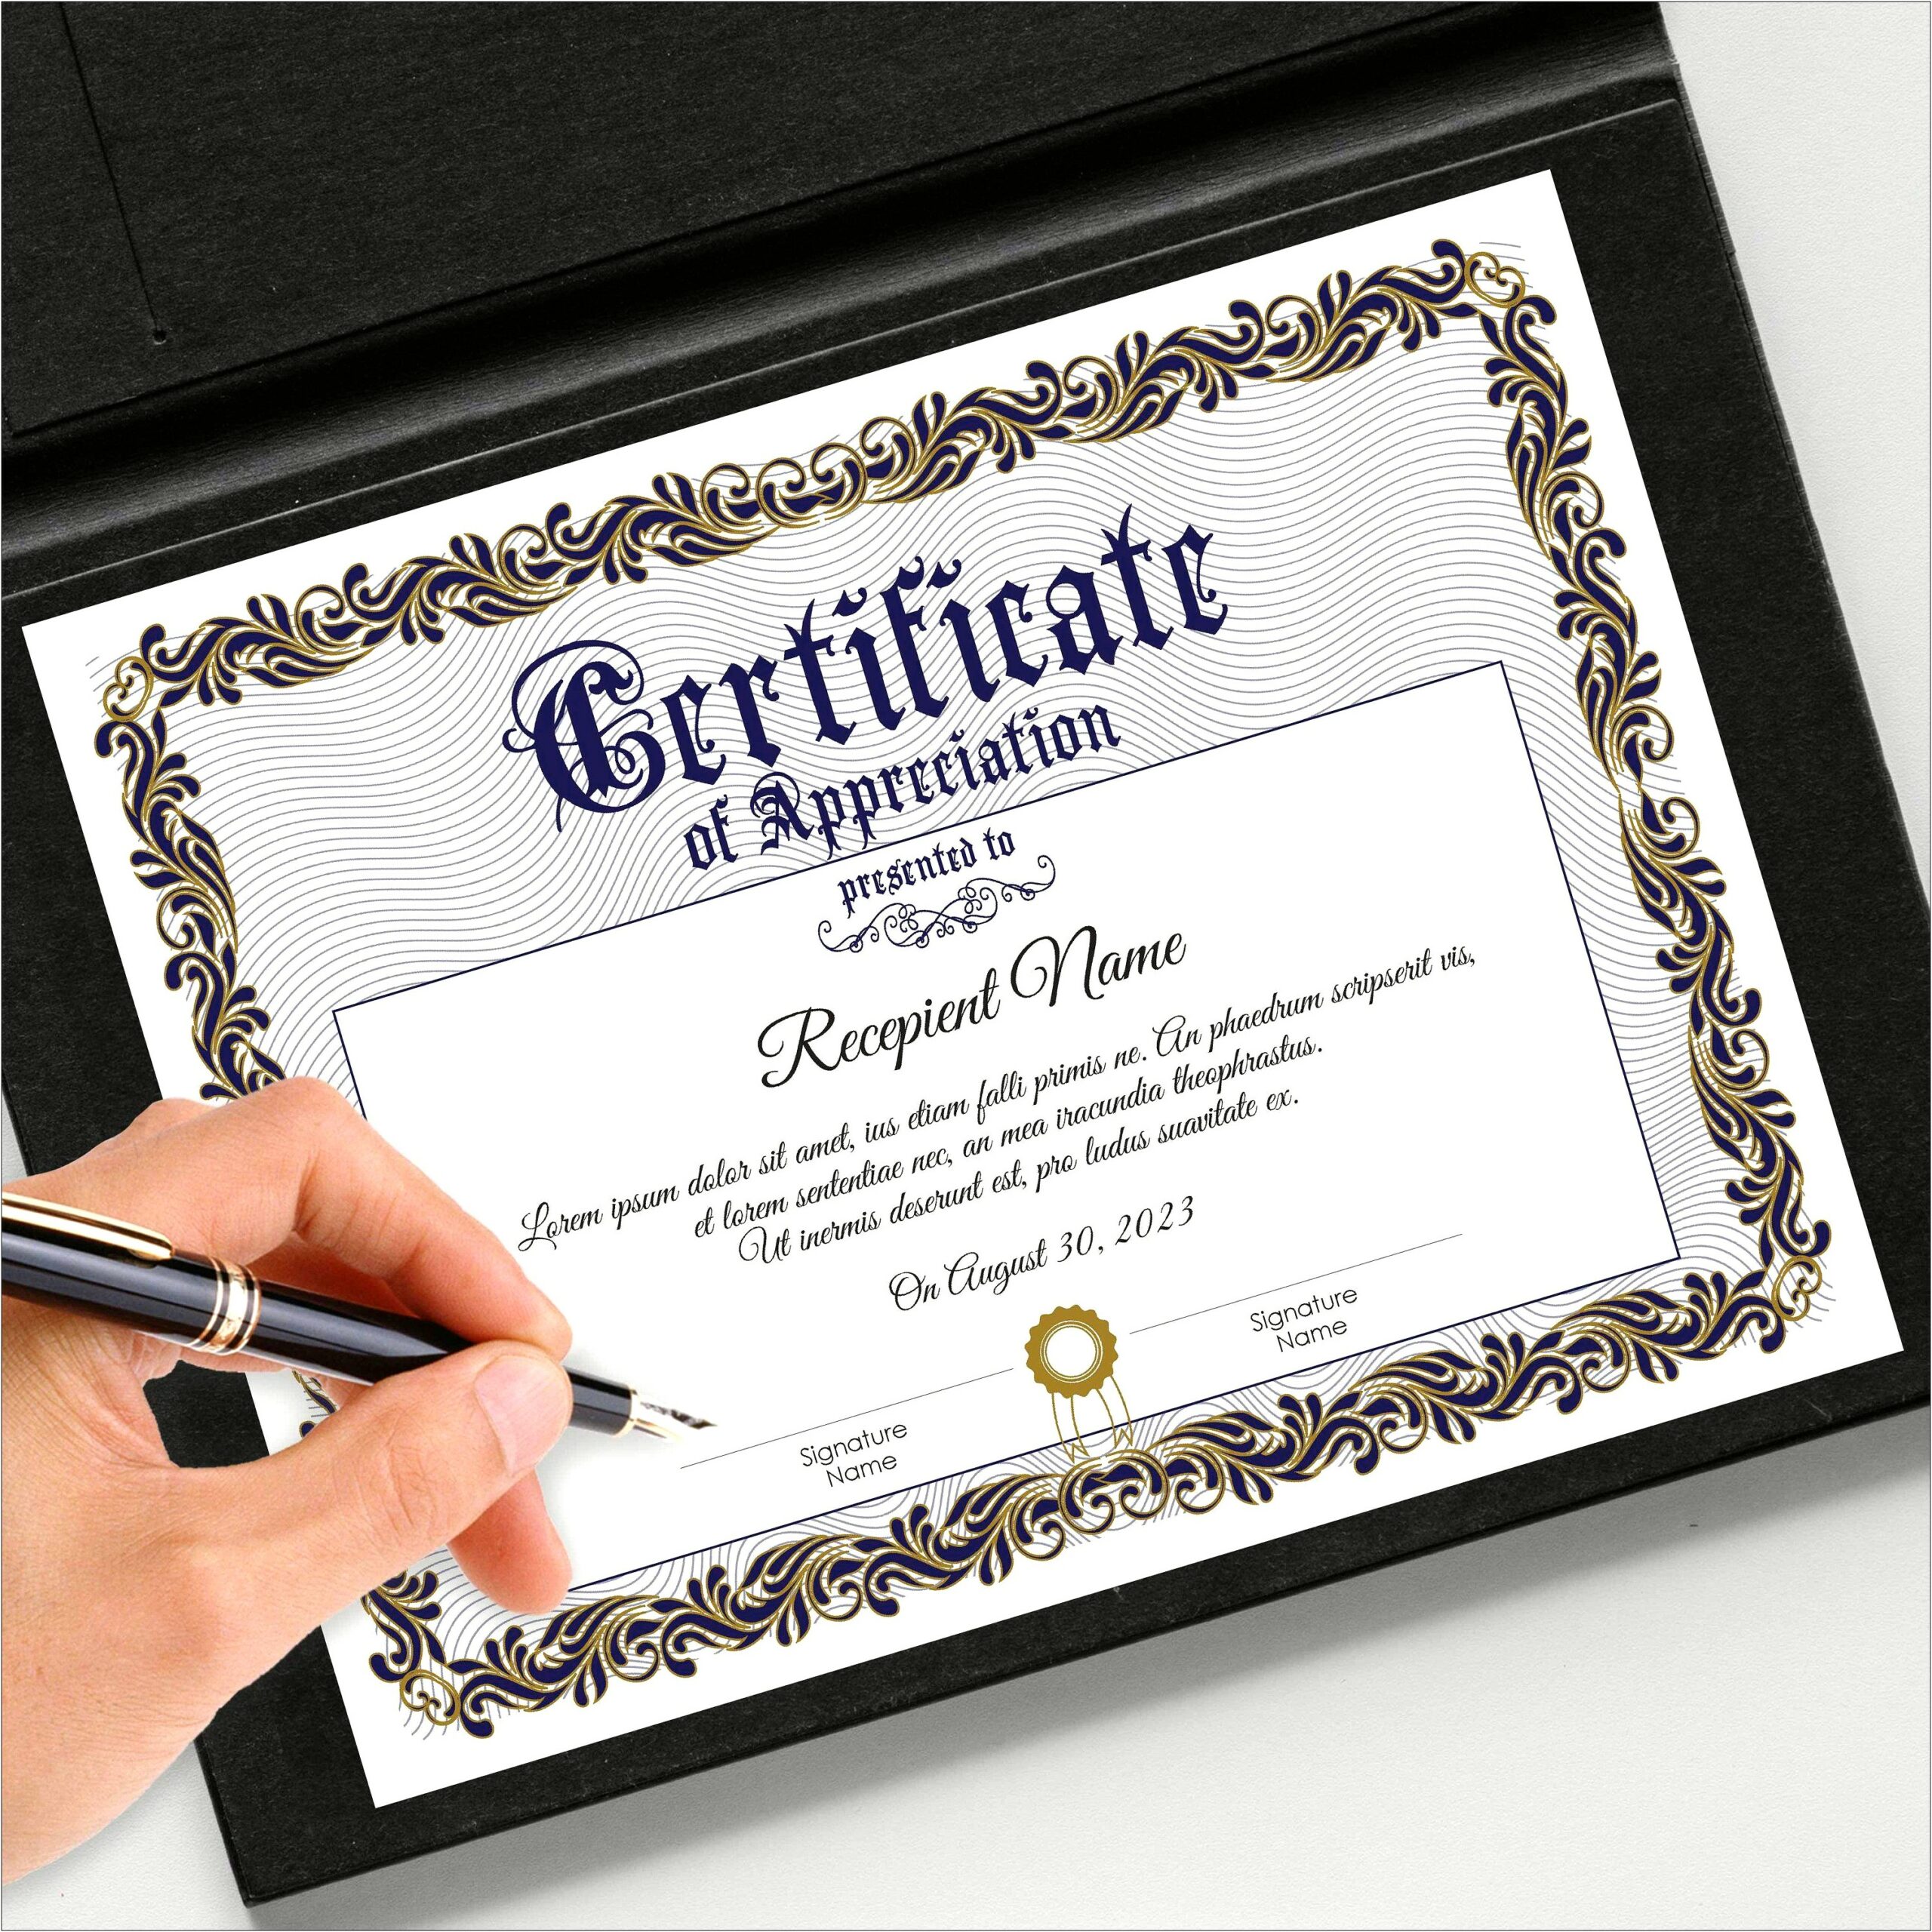 Certificate Of Appreciation Template Free Download Pdf